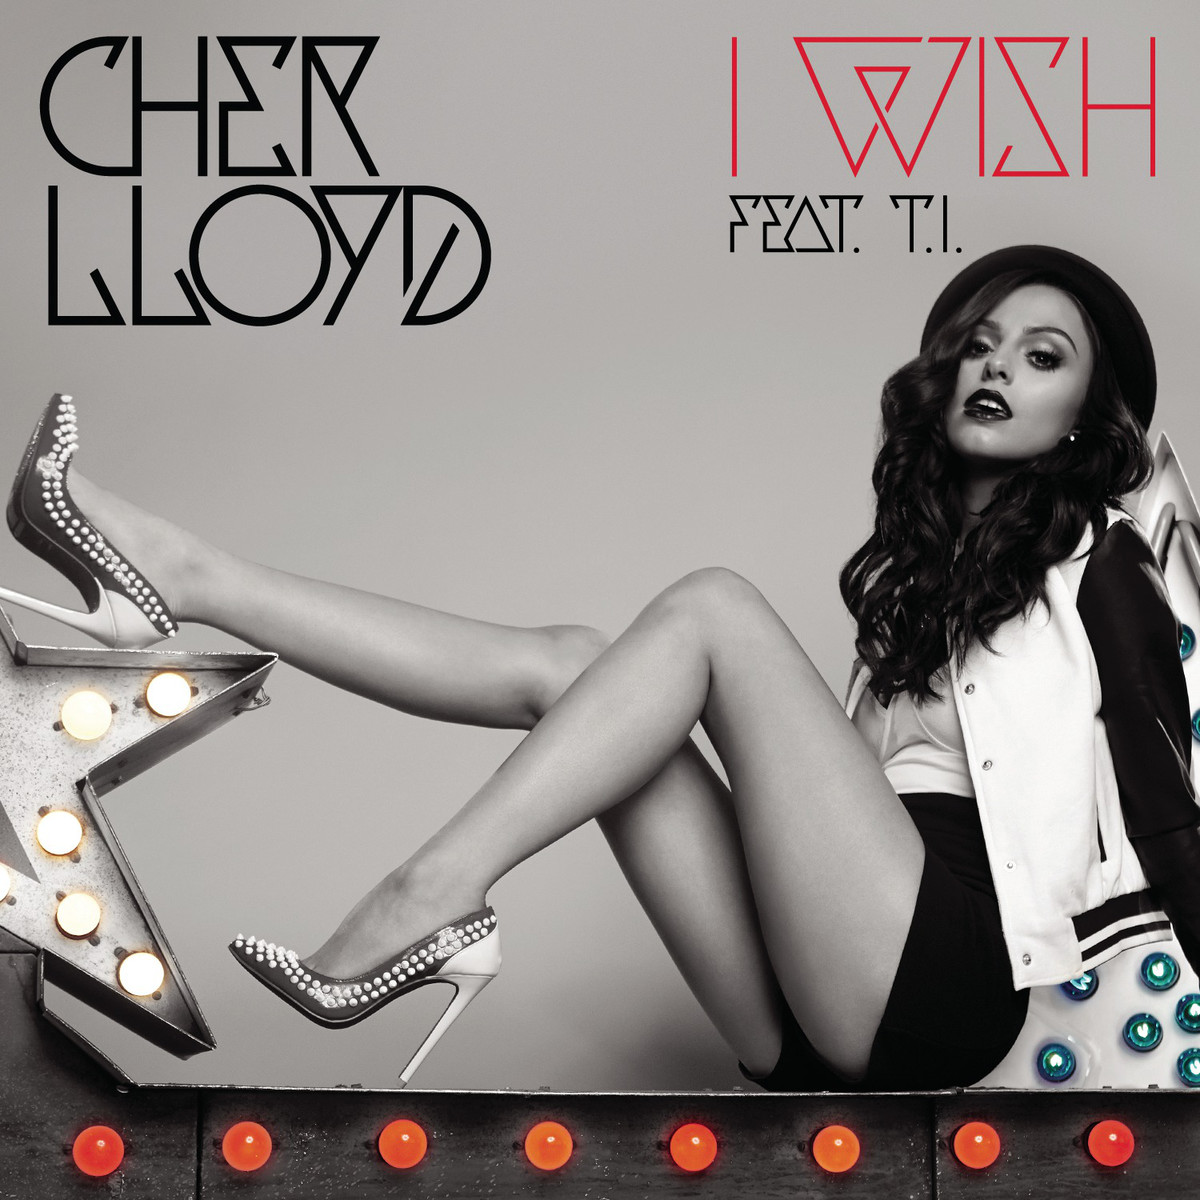 Cher-Lloyd-I-Wish